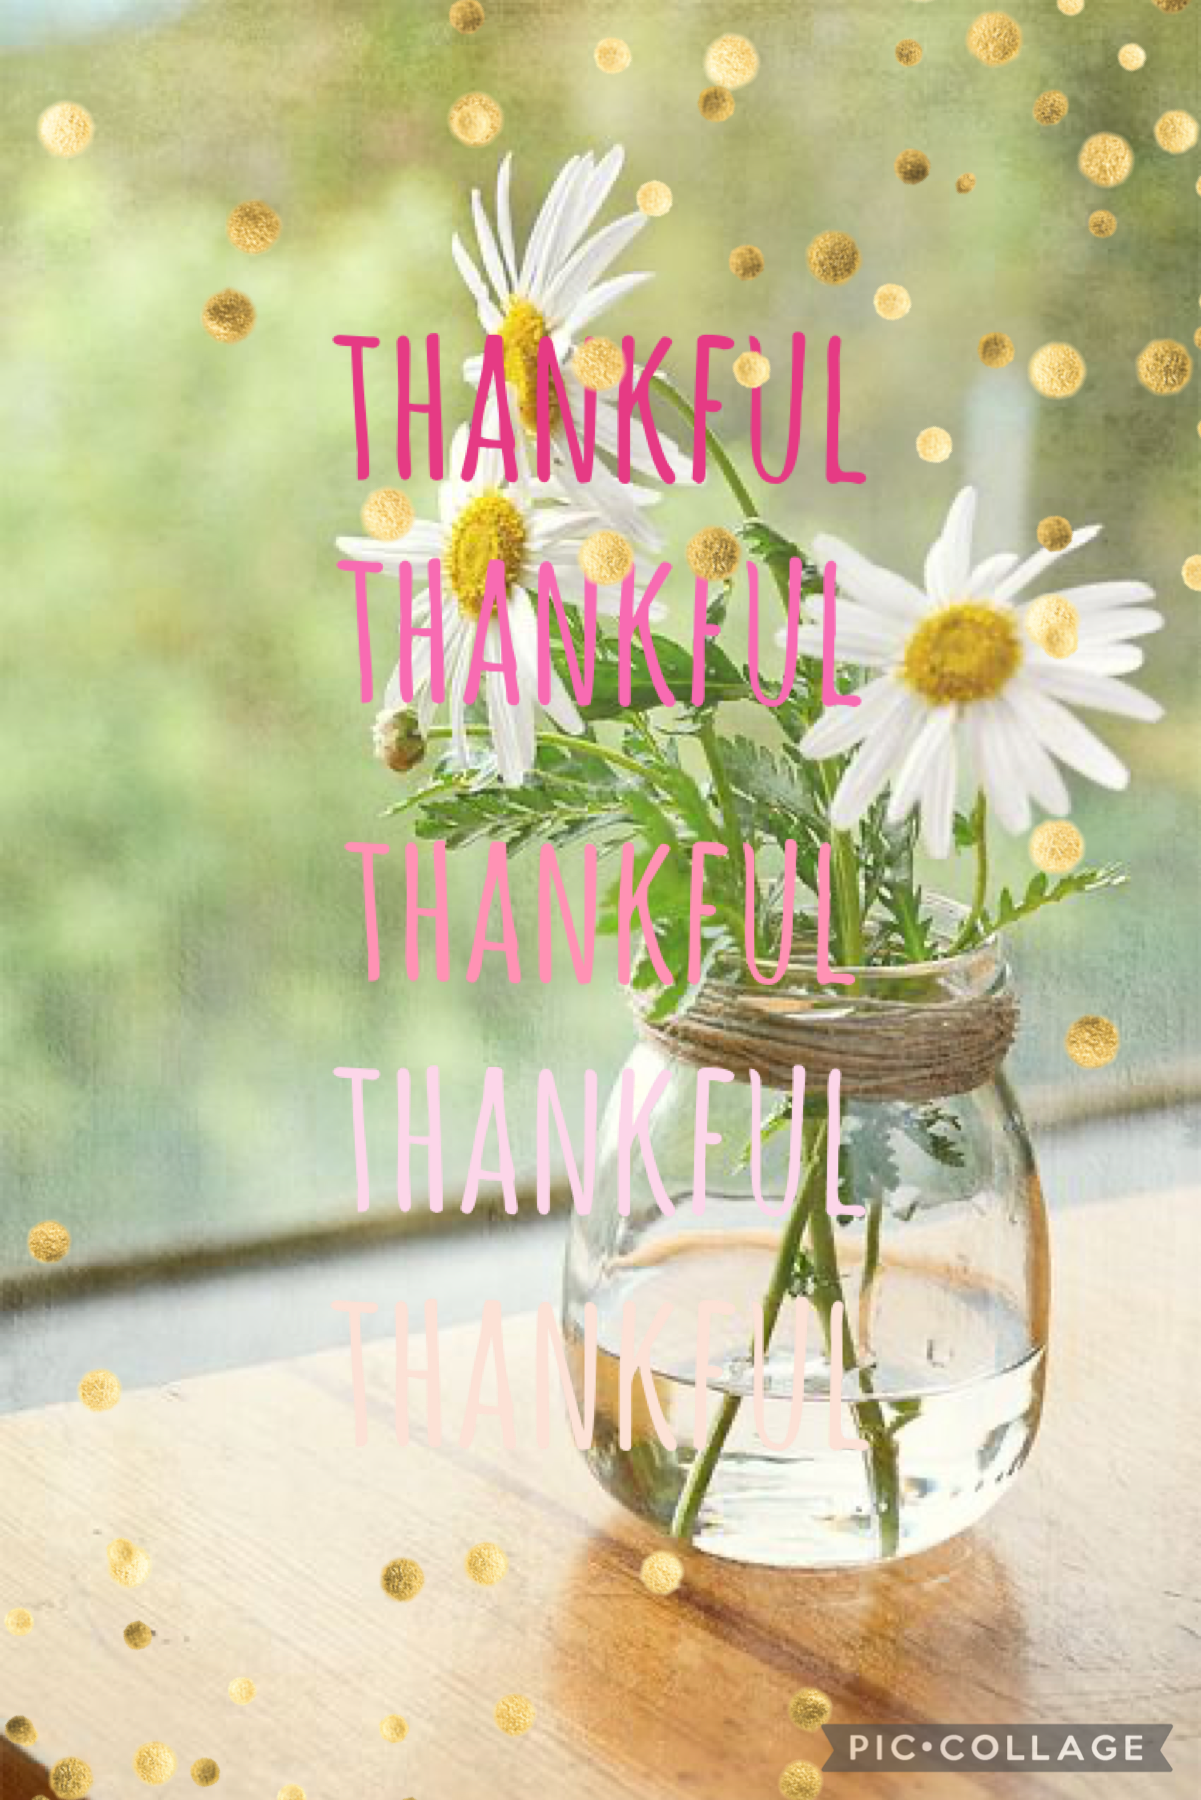 be thankful!